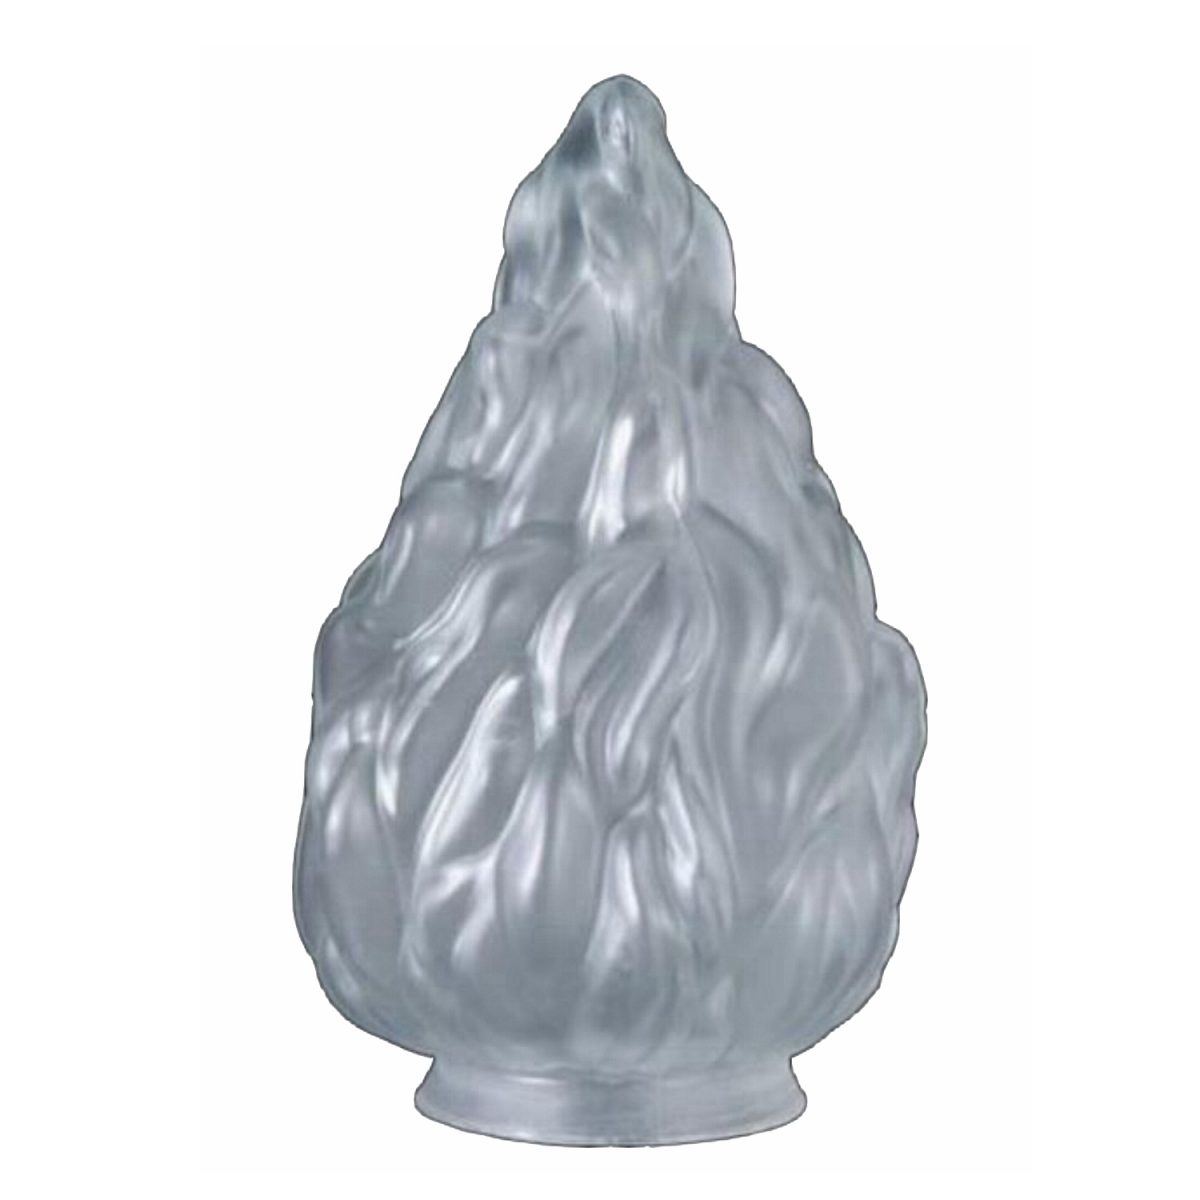 NEW 4 7/8" Satin Crystal Flame Stalactite Glass Pendant Lamp Light Fixture Shade